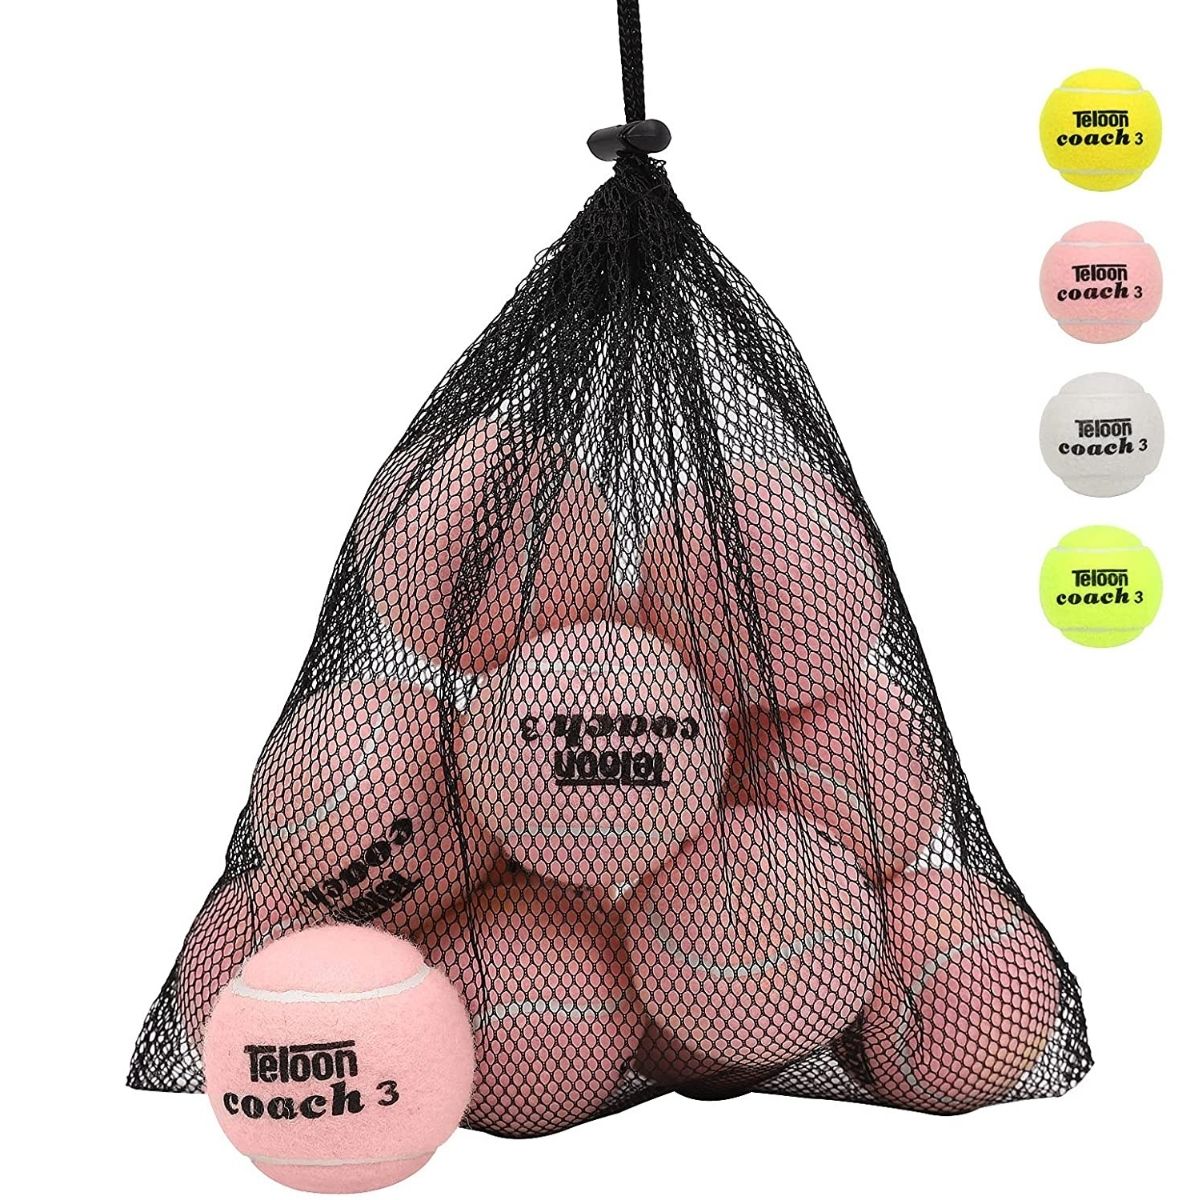 The Best Tennis Balls for Ball Machine Options: : Teloon Pressure Training Tennis Balls